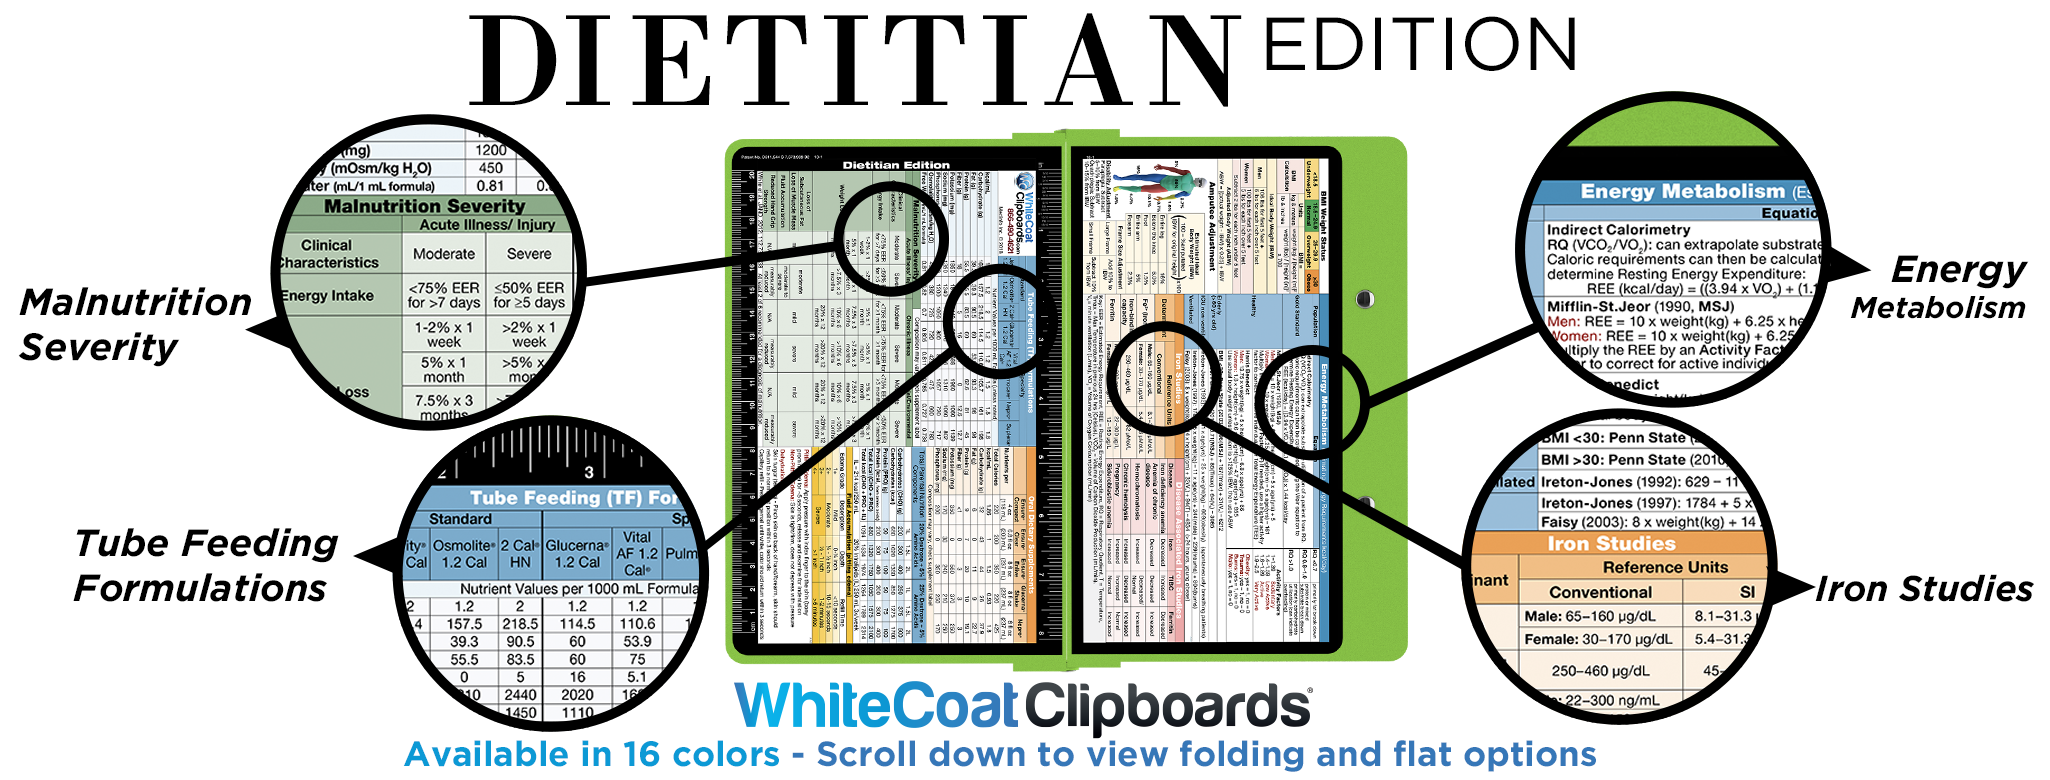 WhiteCoat Clipboard - Dietitian Edition